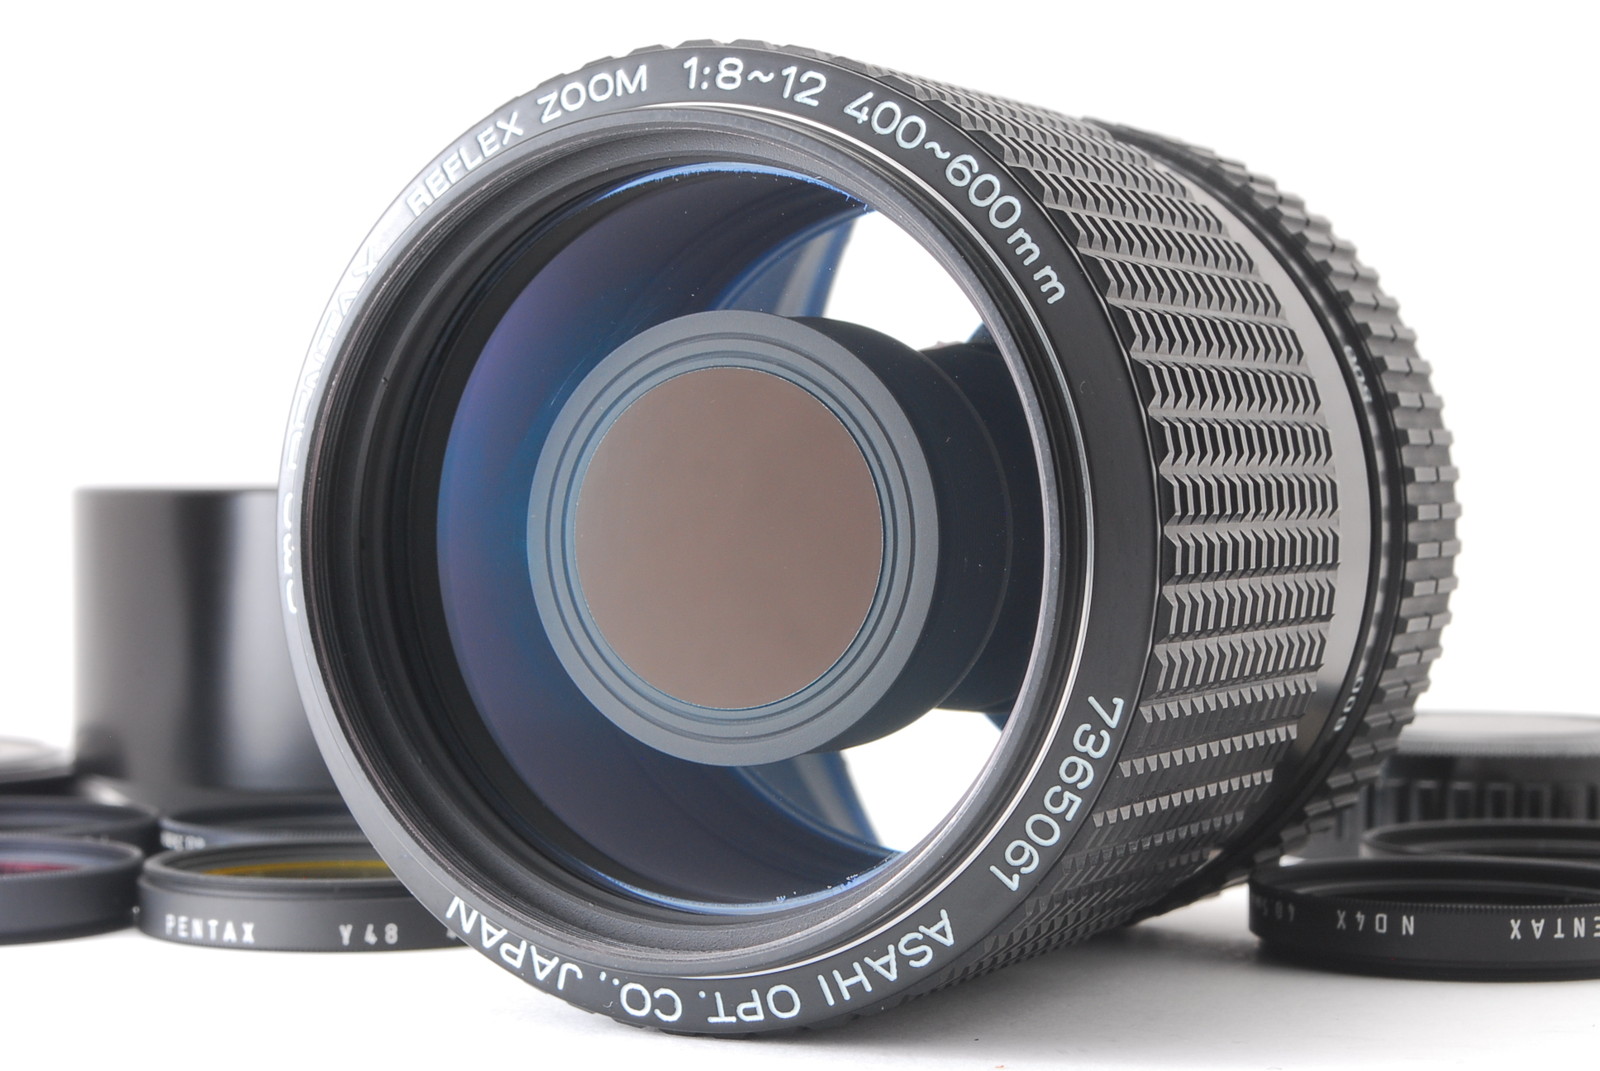 PROMOTION. NEAR MINT Asahi Opt Pentax smc PENTAX REFLEX ZOOM 400-600mm f/8-12, Case, Hood, Front Cap, Rear Cap, Lens Filters from Japan